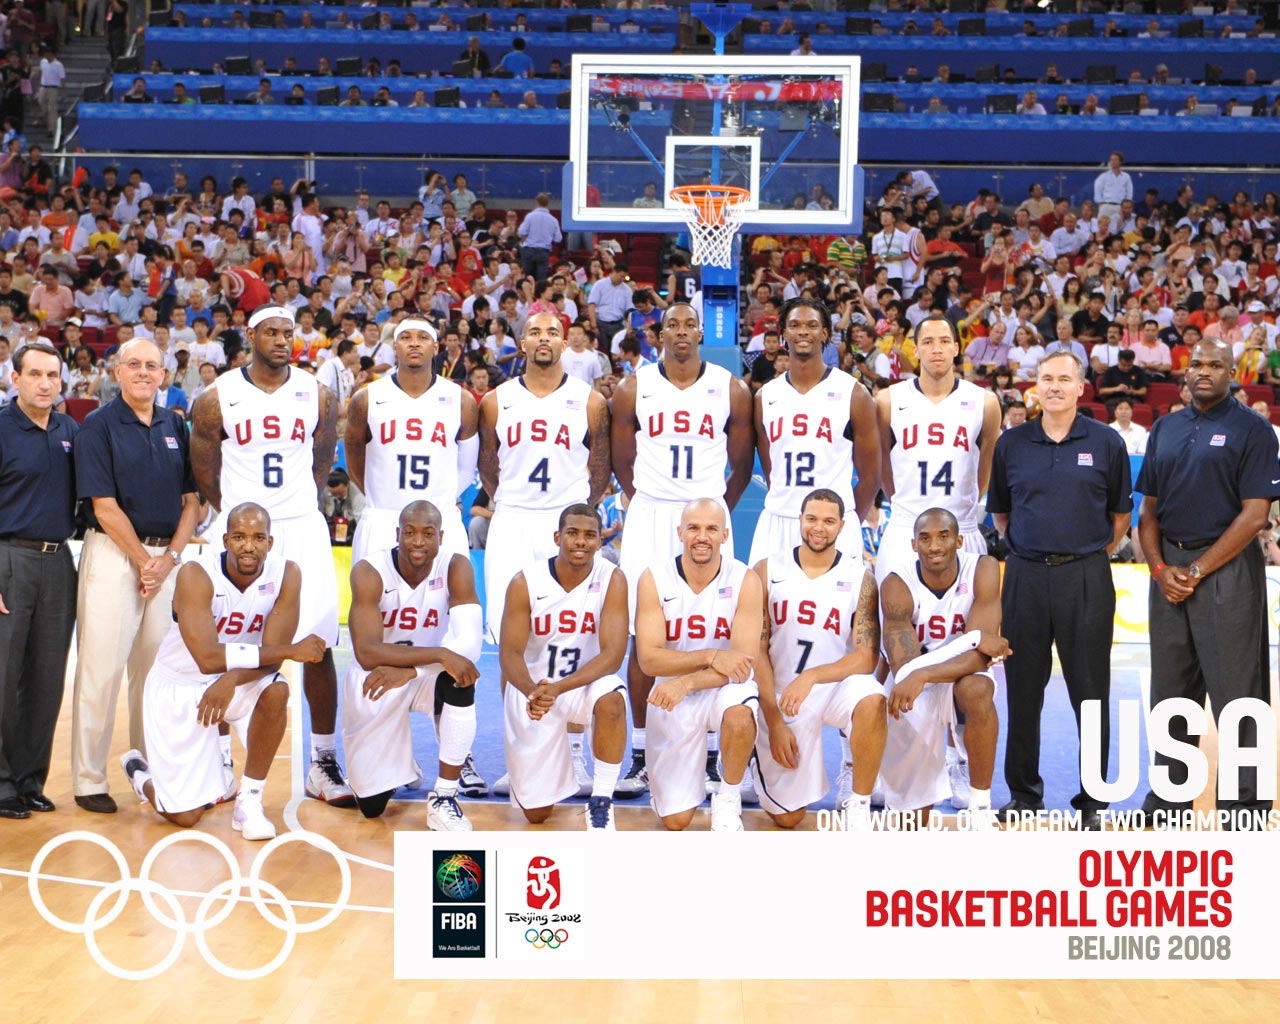 USA Basketball Olympic Team 2008 Wallpaper Basketball Wallpapers at